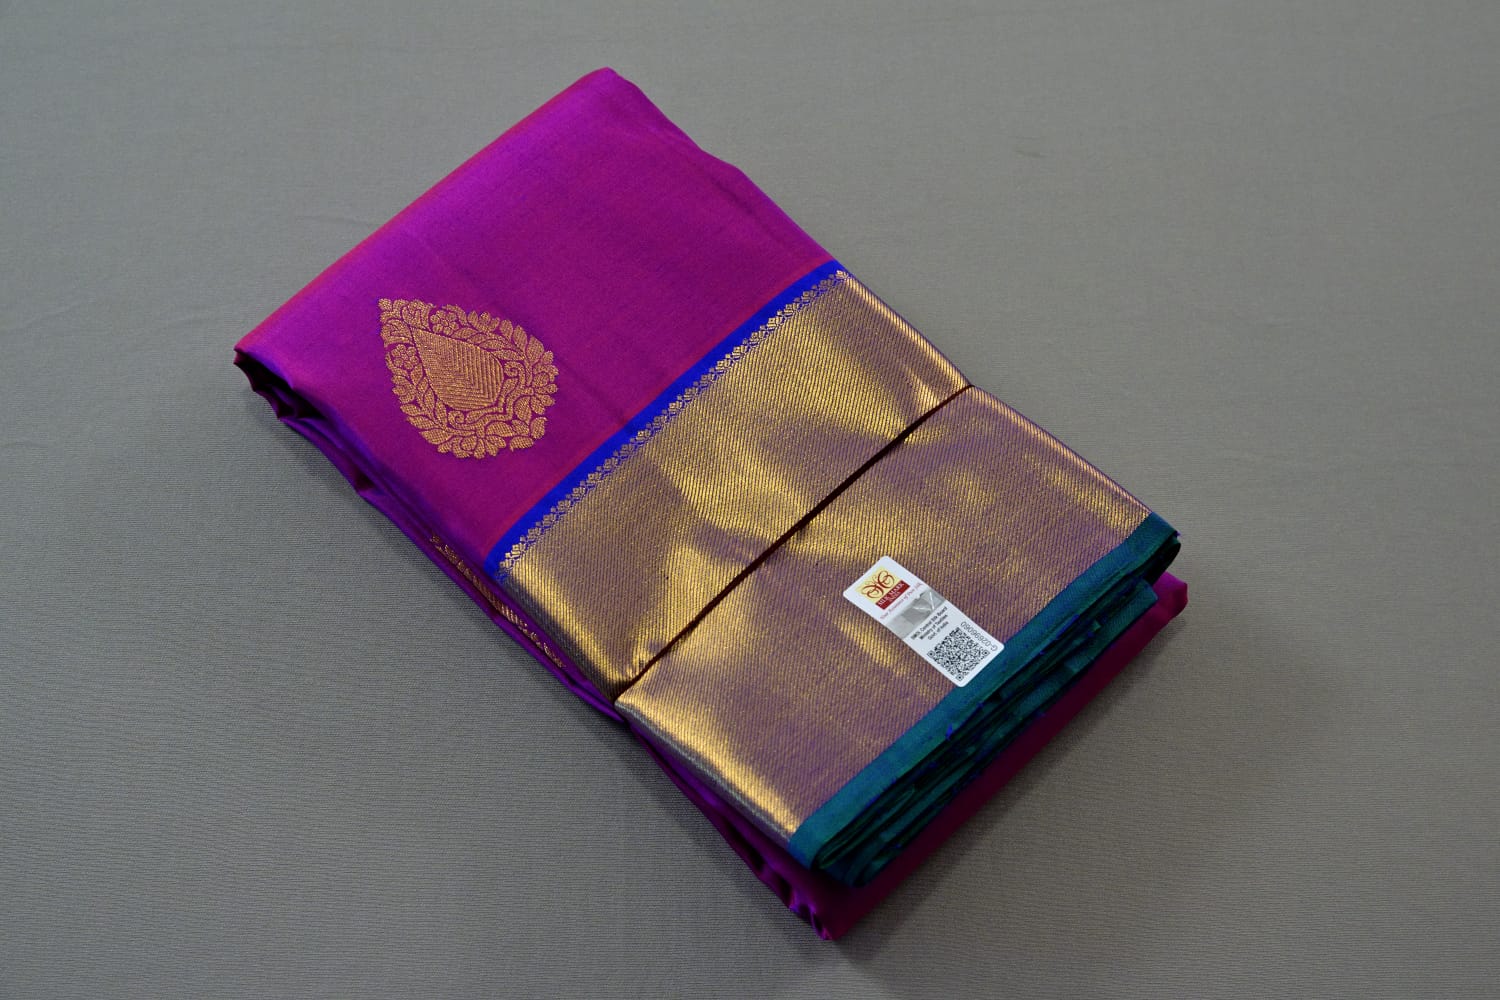 Kanchipuram handloom pure silk in purple with royal blue color saree - Vannamayil Fashions